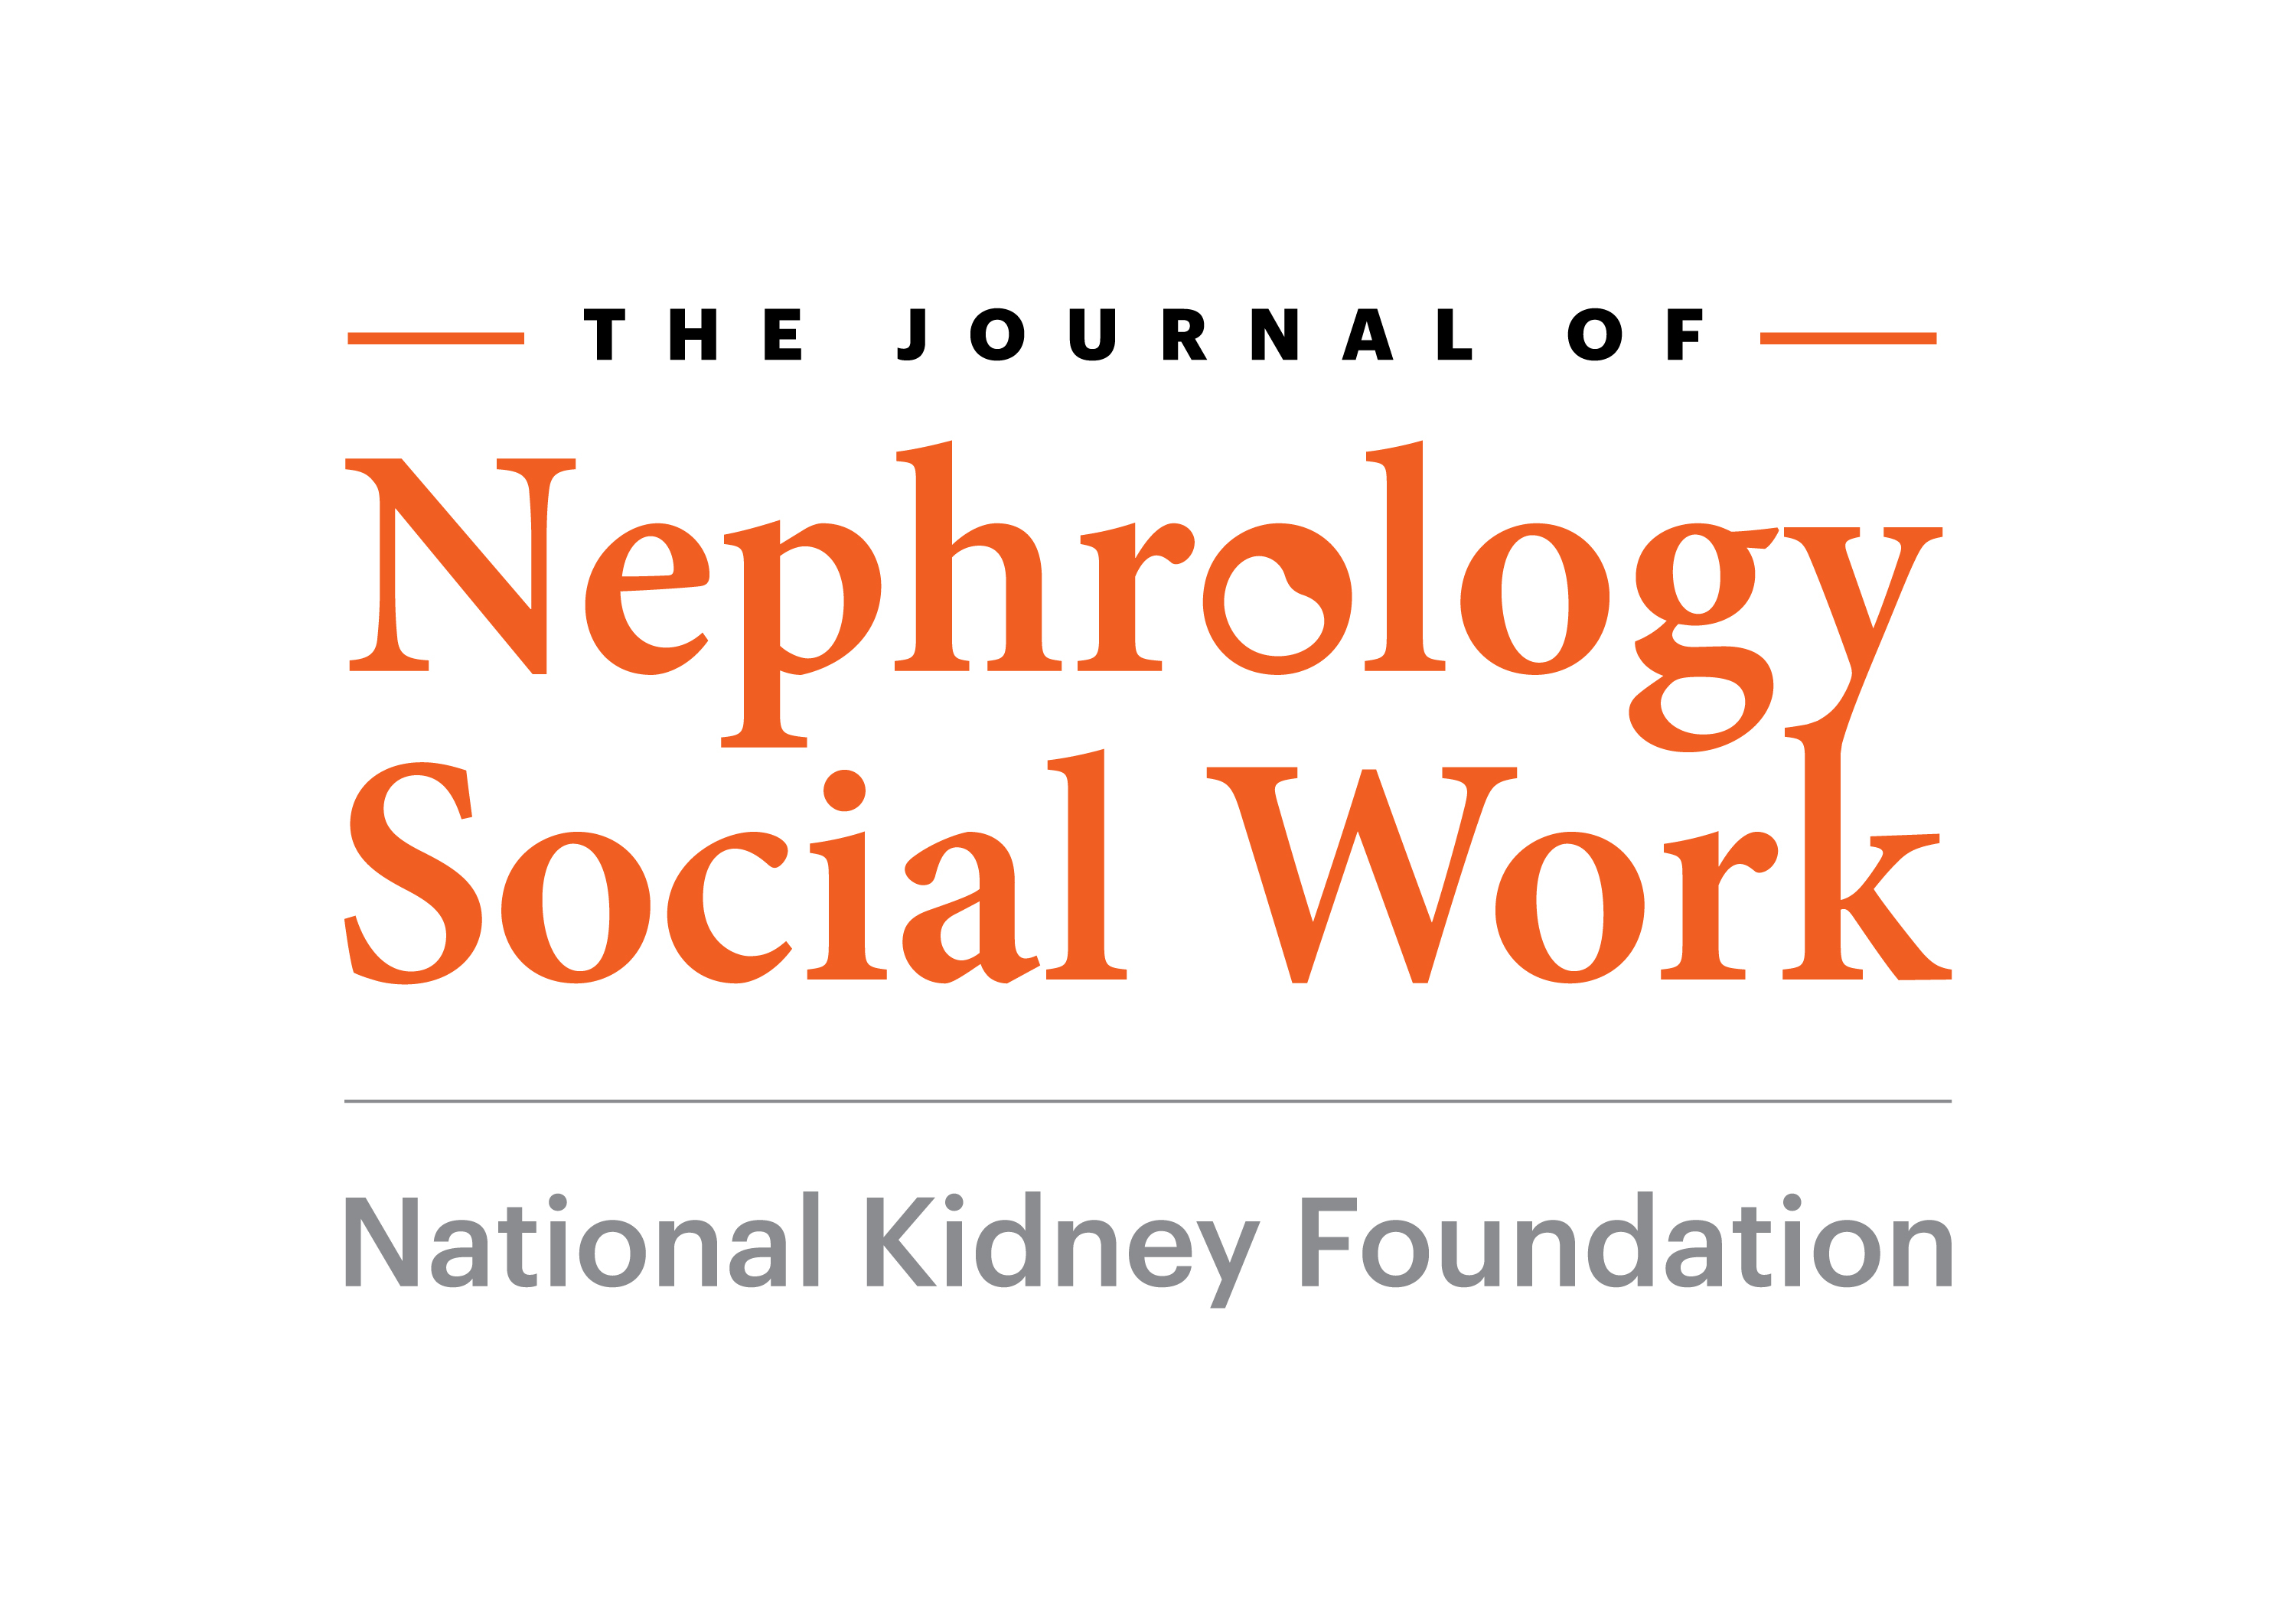 The Journal of Nephrology Social Work, National Kidney Foundation